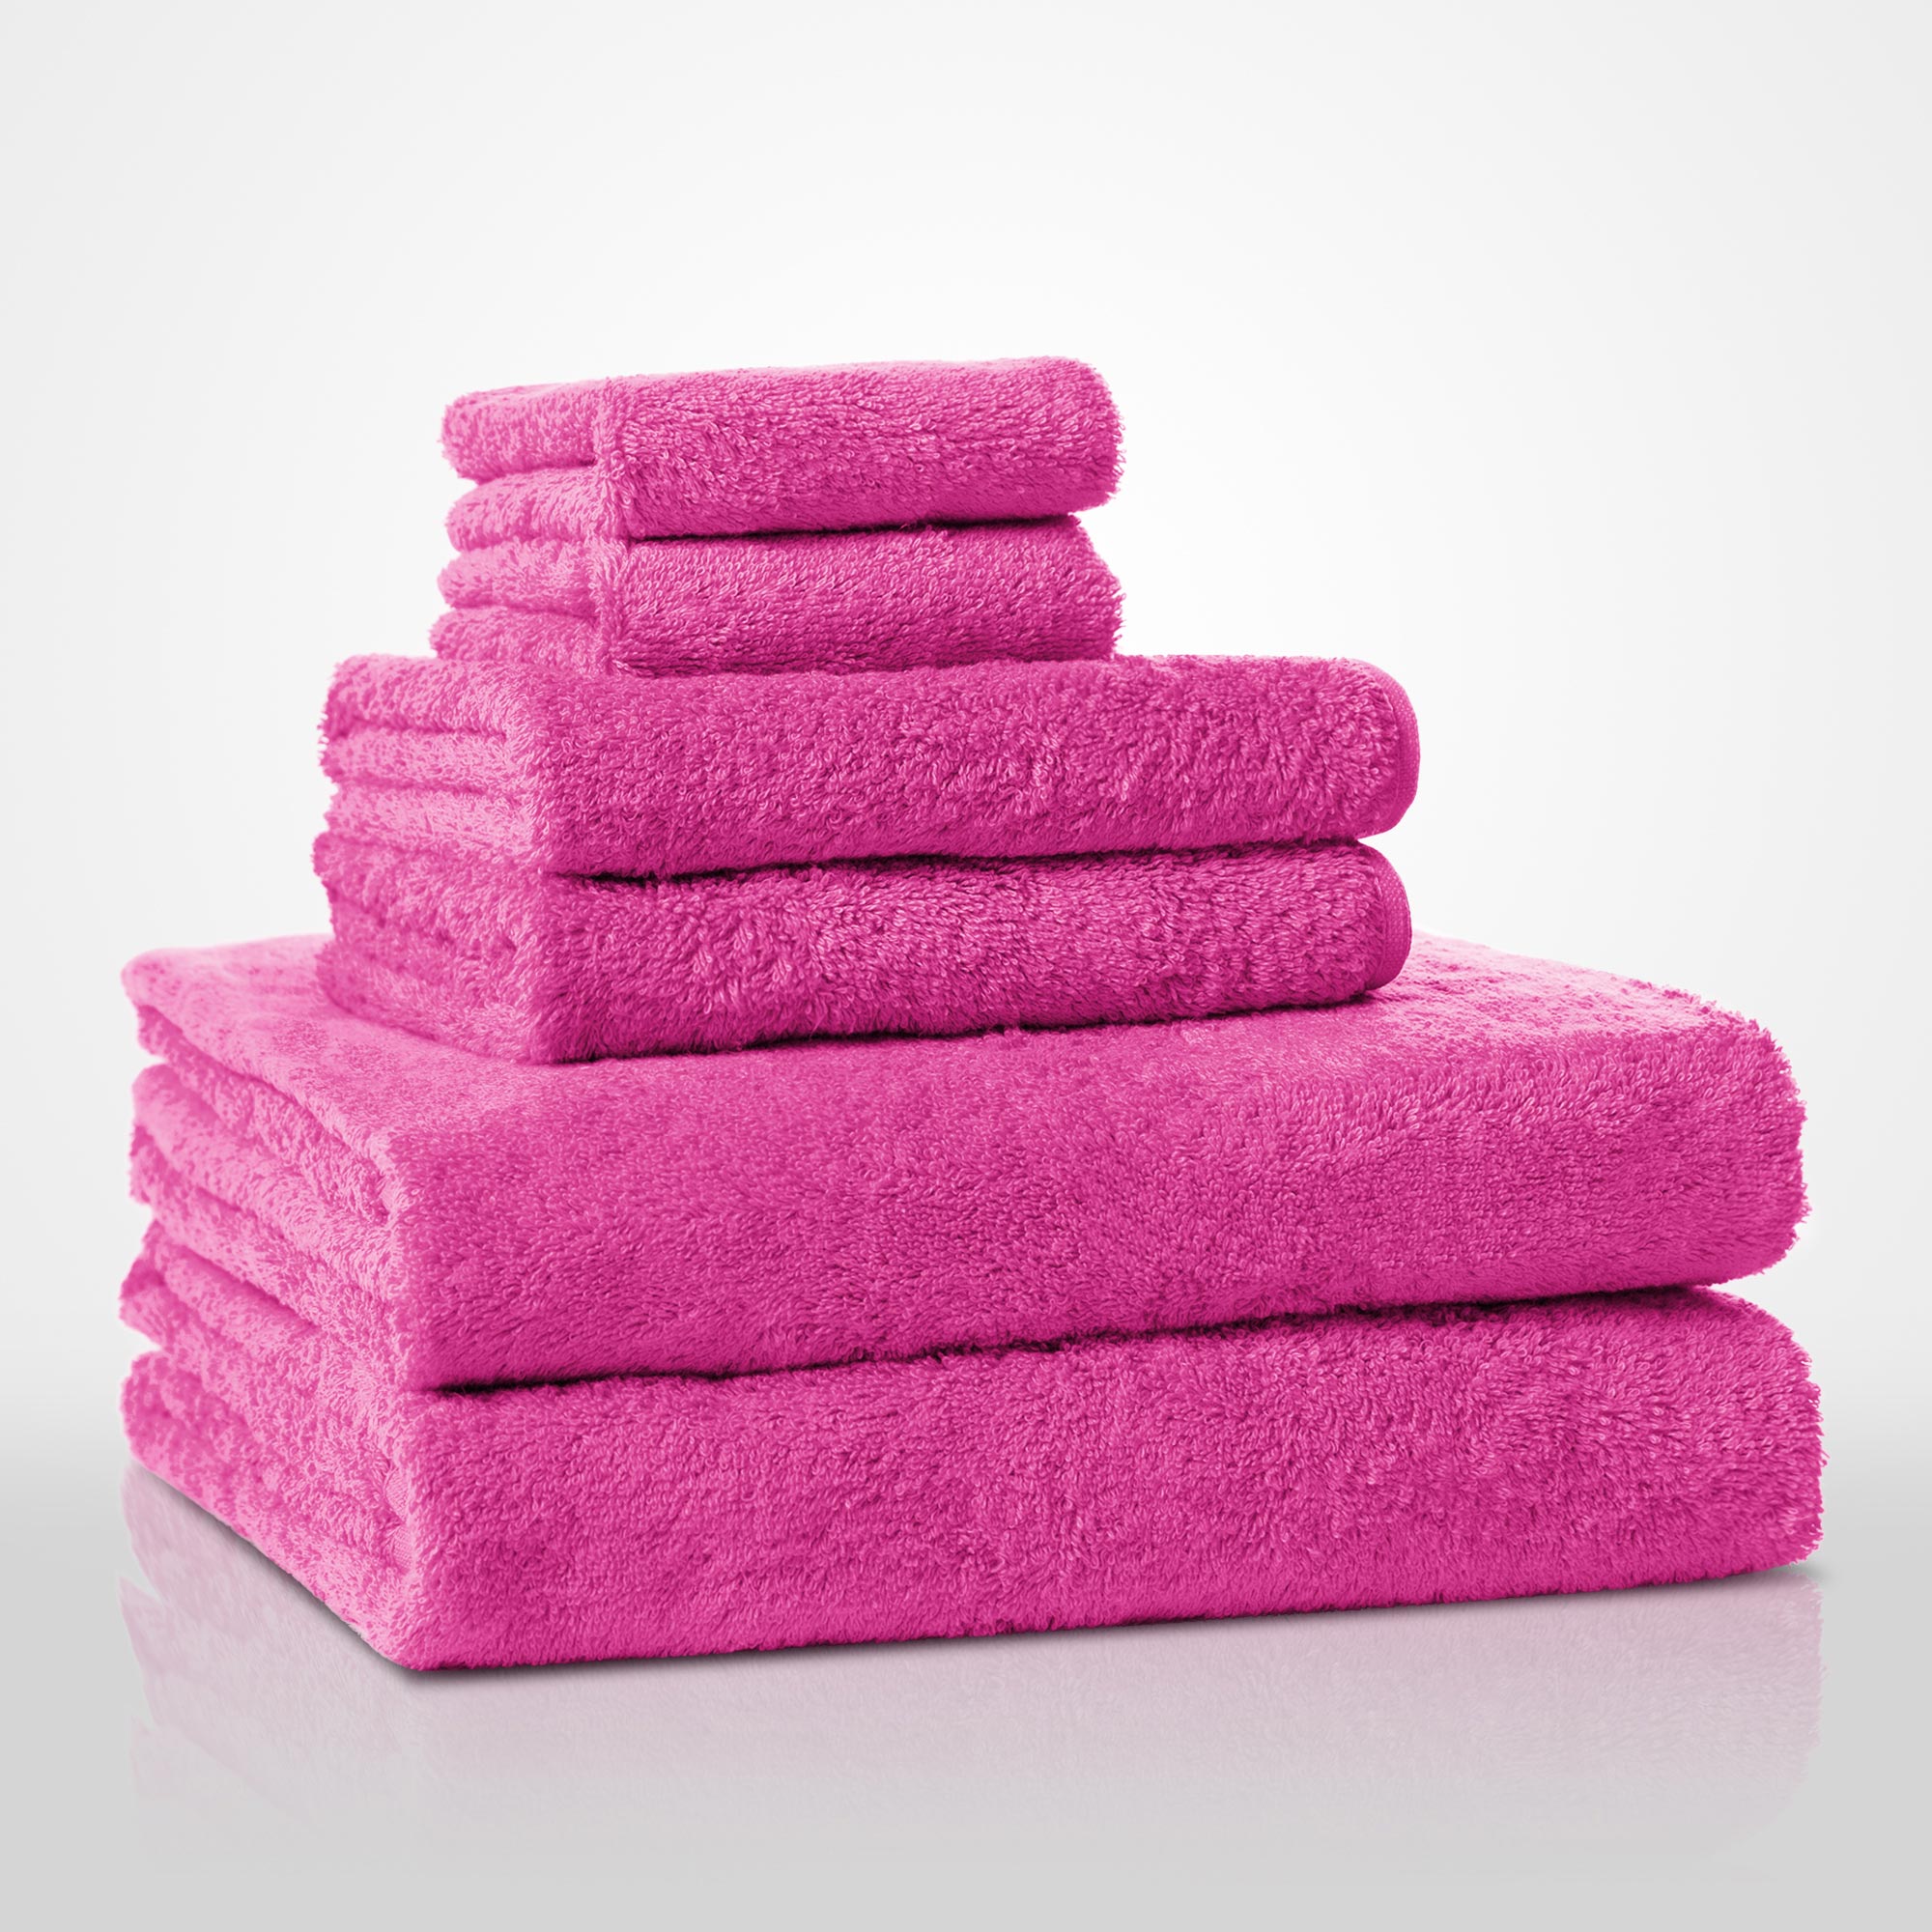 35"x 60" - 100% Turkish Cotton Fuchsia Terry Bath Towel-Robemart.com